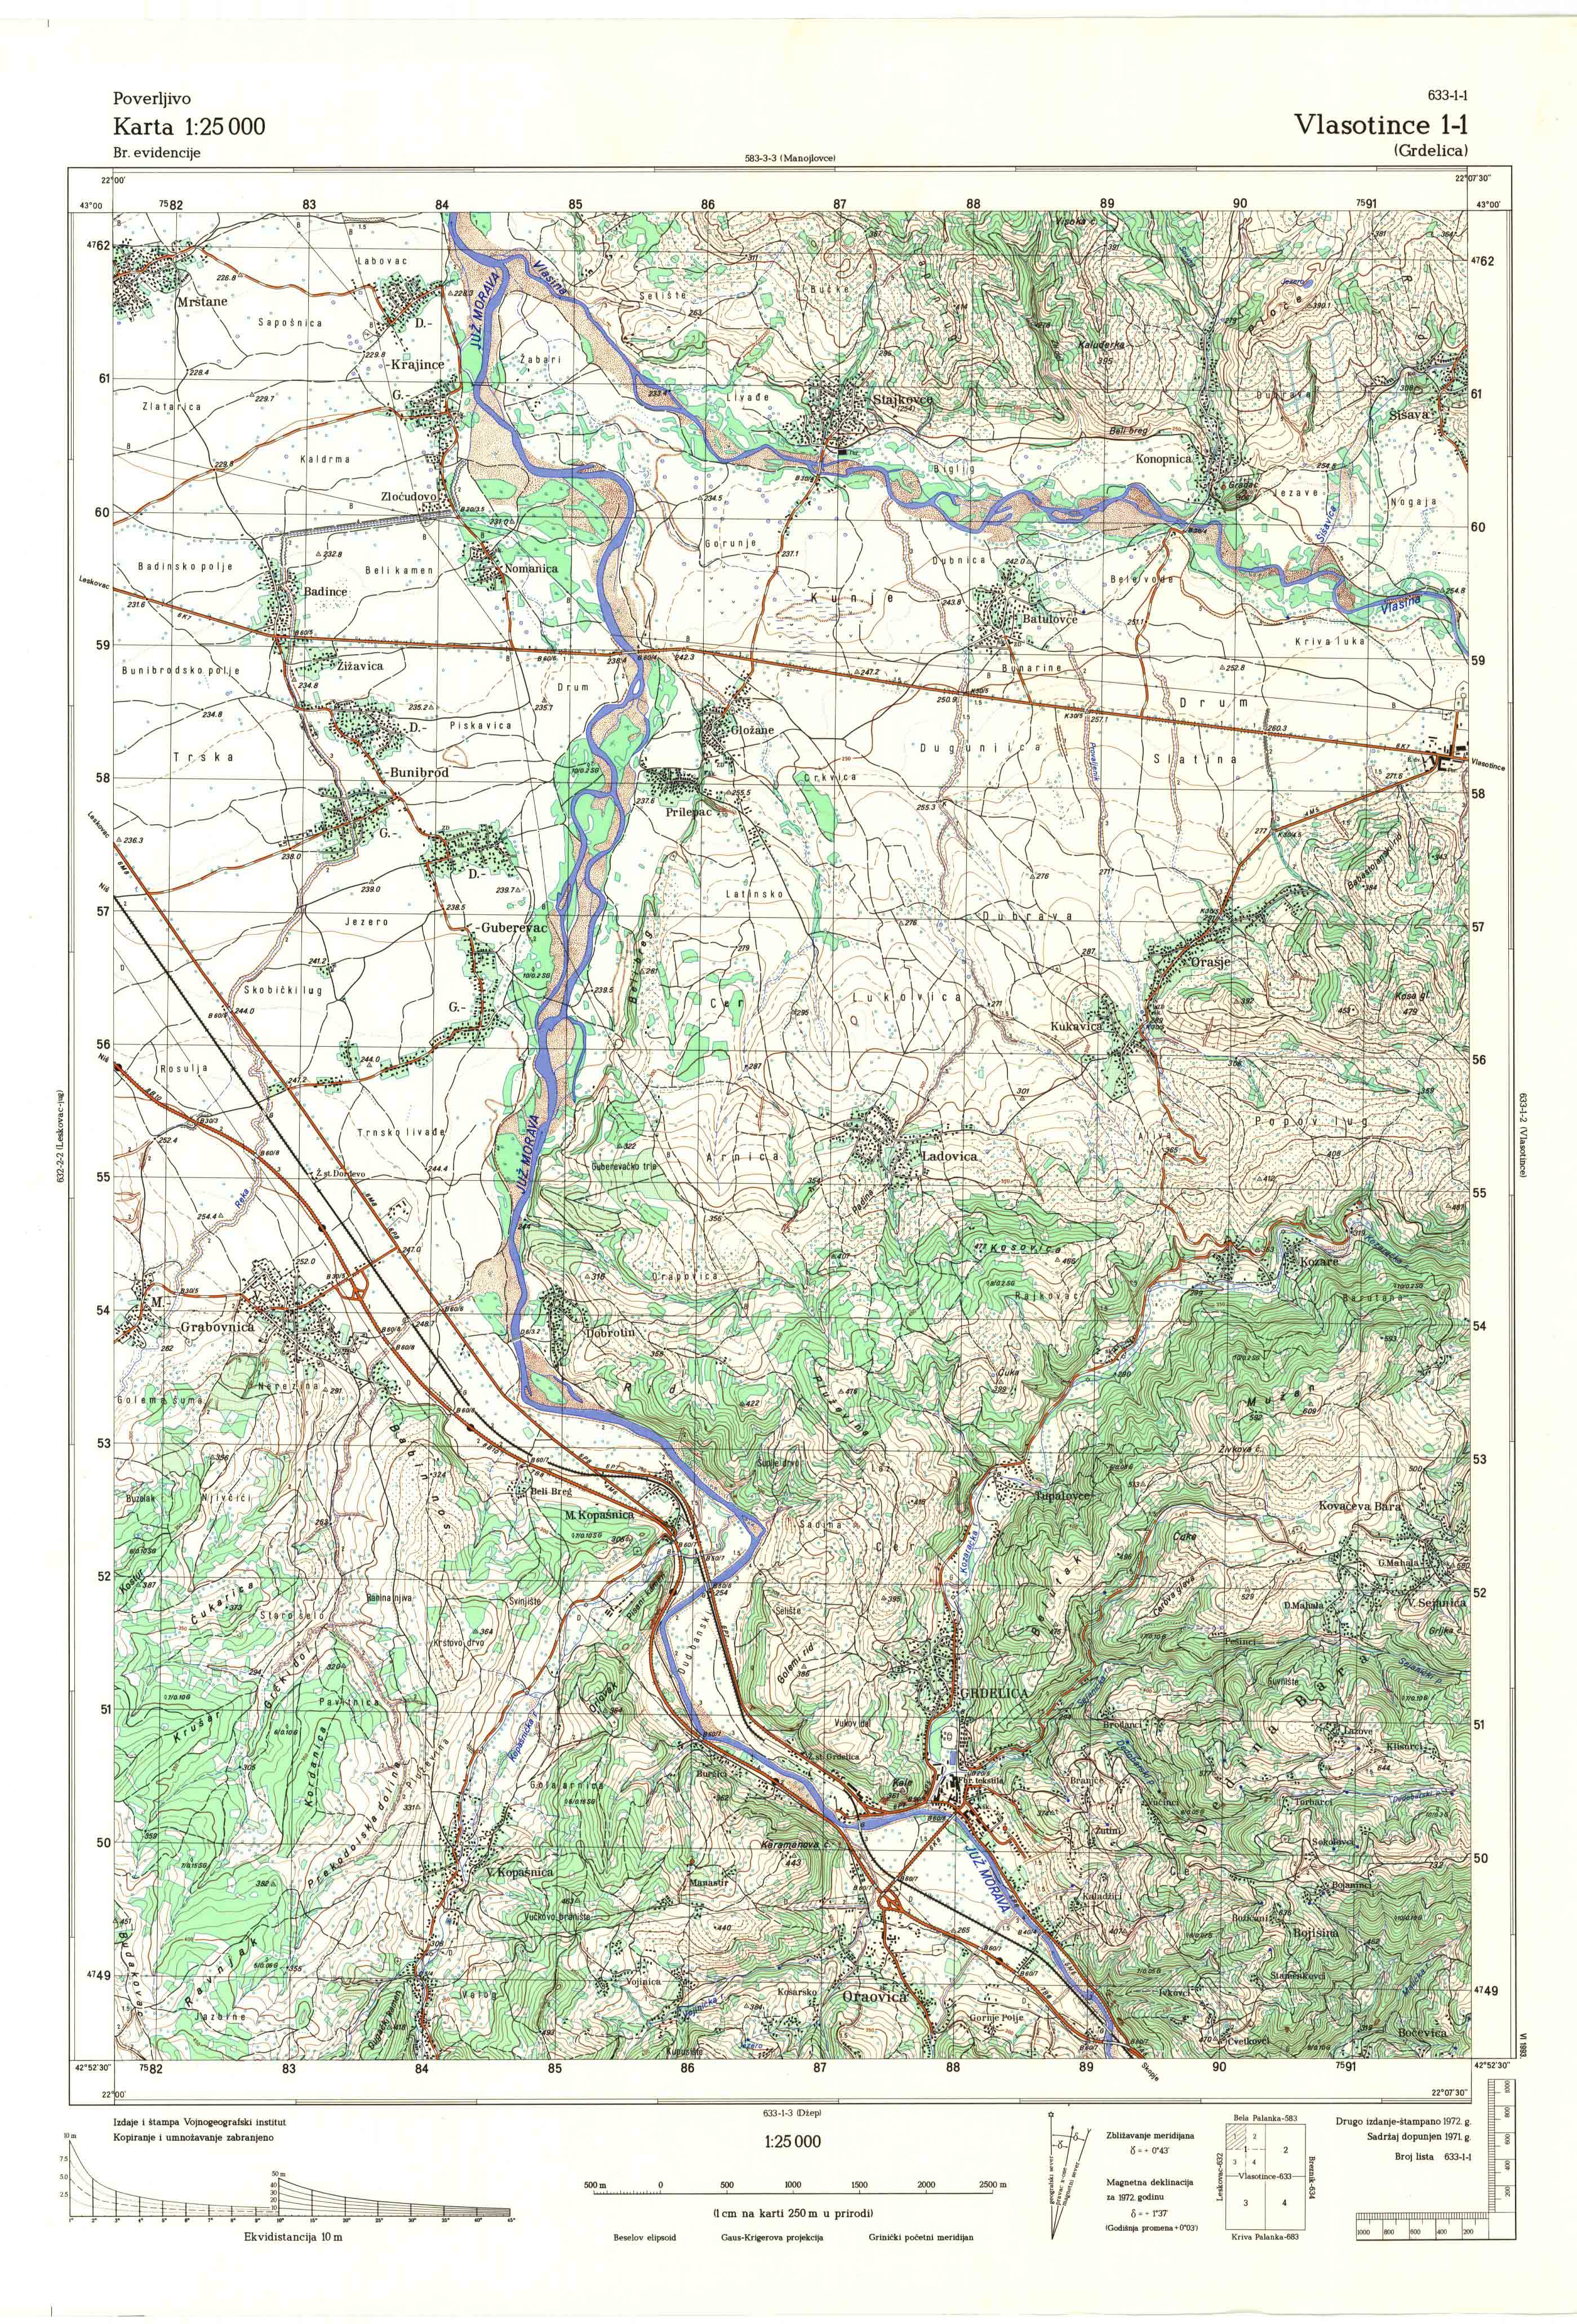  topografska karta srbije 25000 JNA  Vlasotince